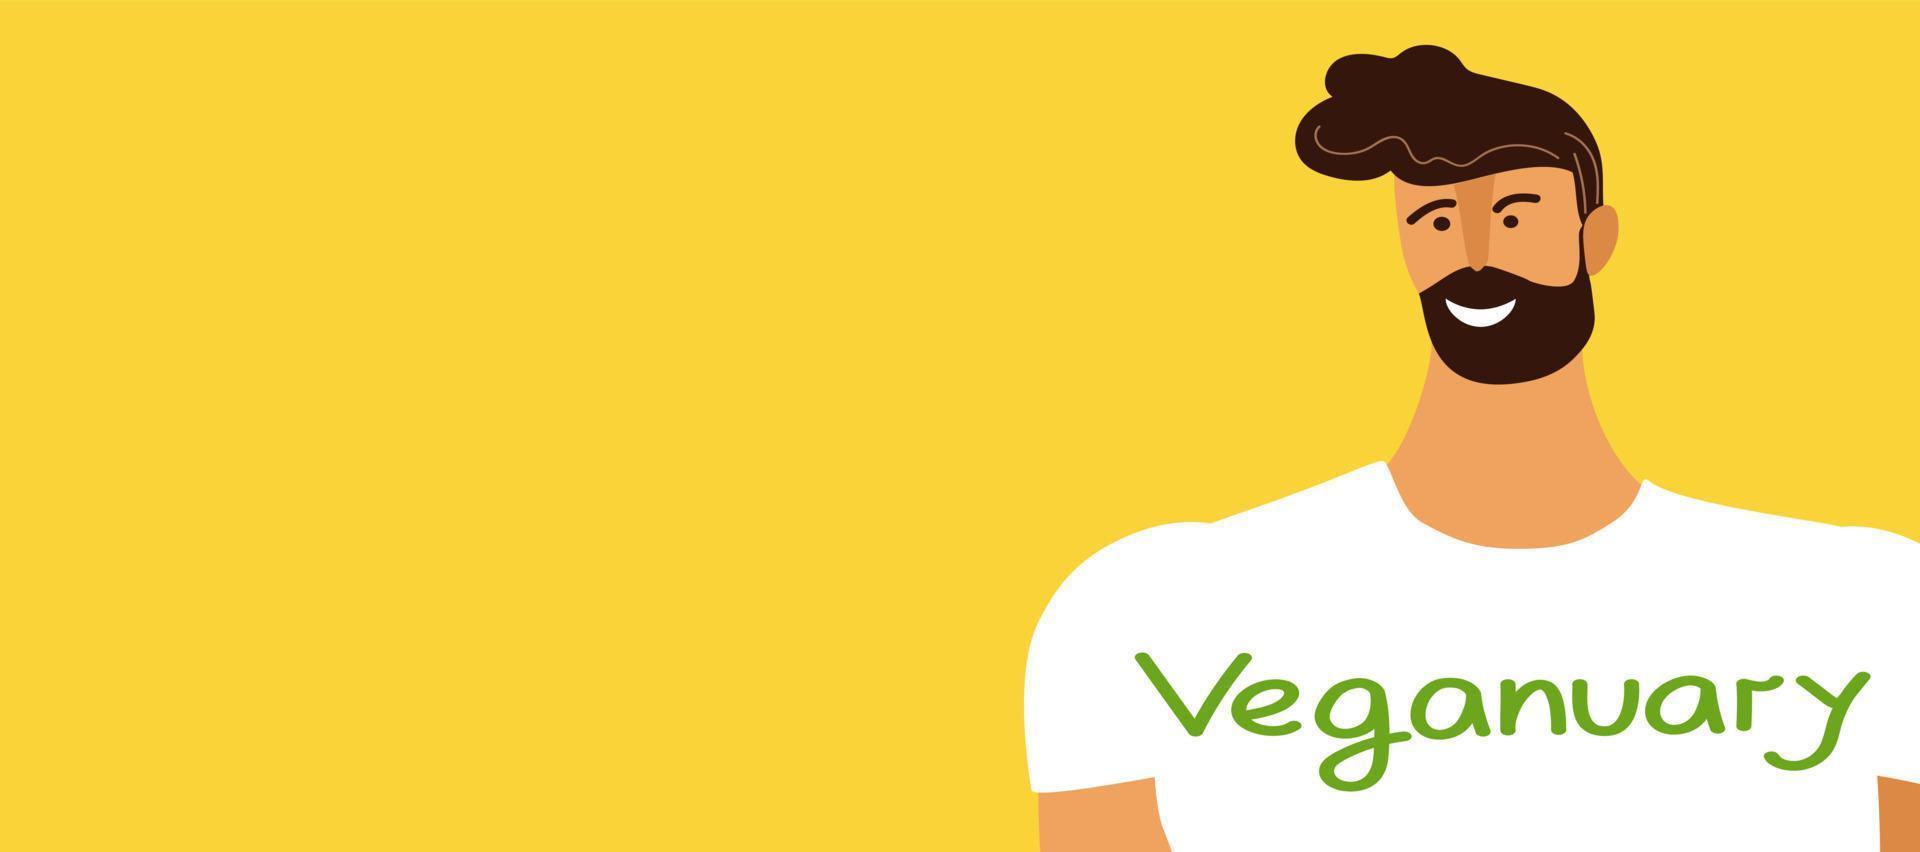 Vektor-flaches Doodle-Cartoon-Banner des veganen Welttages. ernährungsplankonzept, gesunde ernährung, programm. vektor